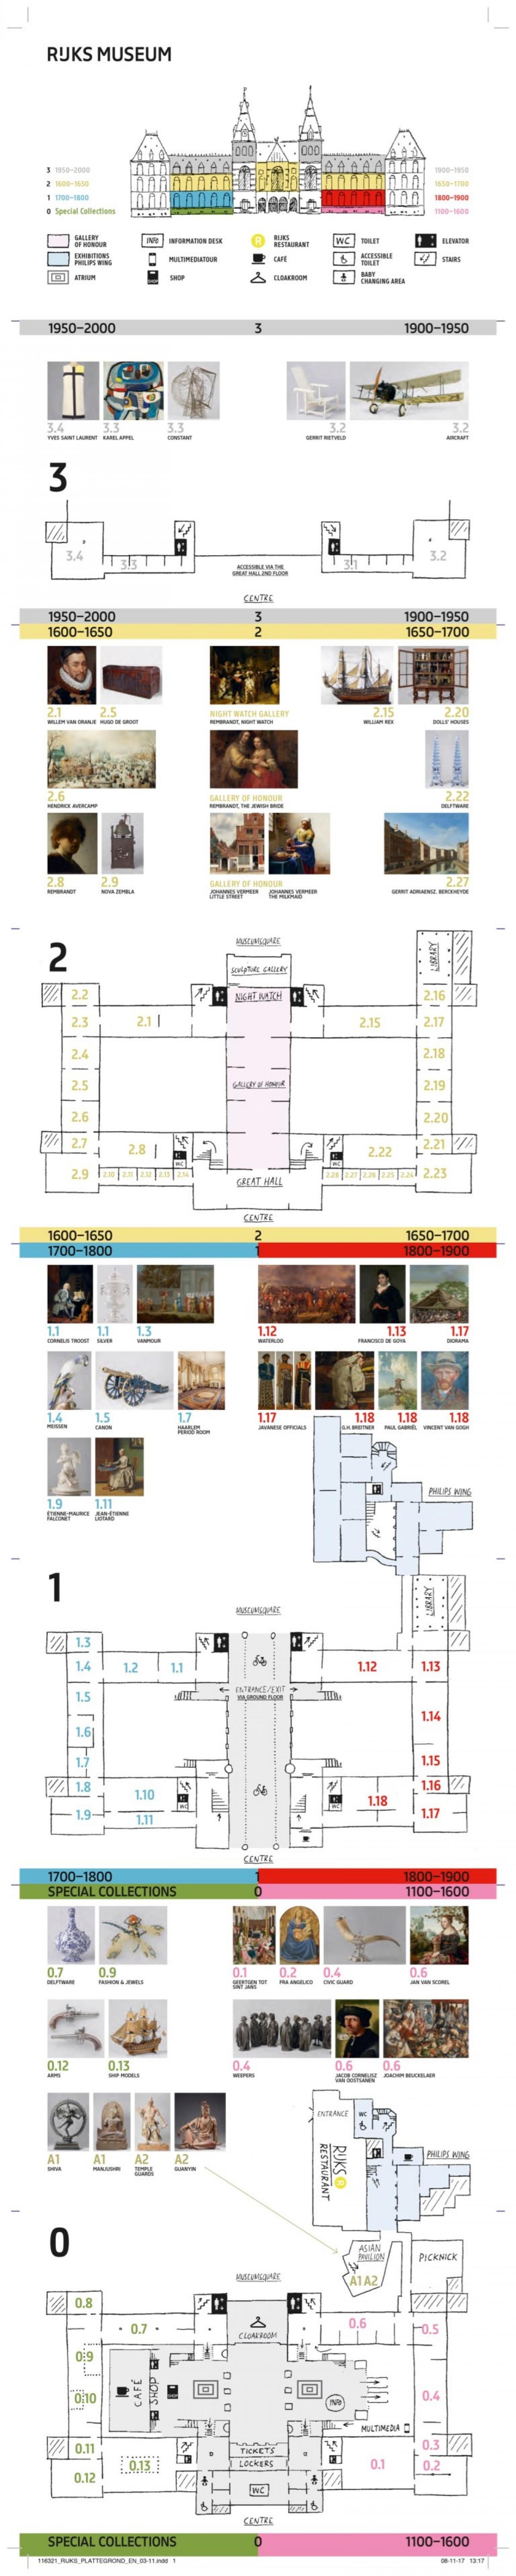 mapa muzeum rijksmuseum